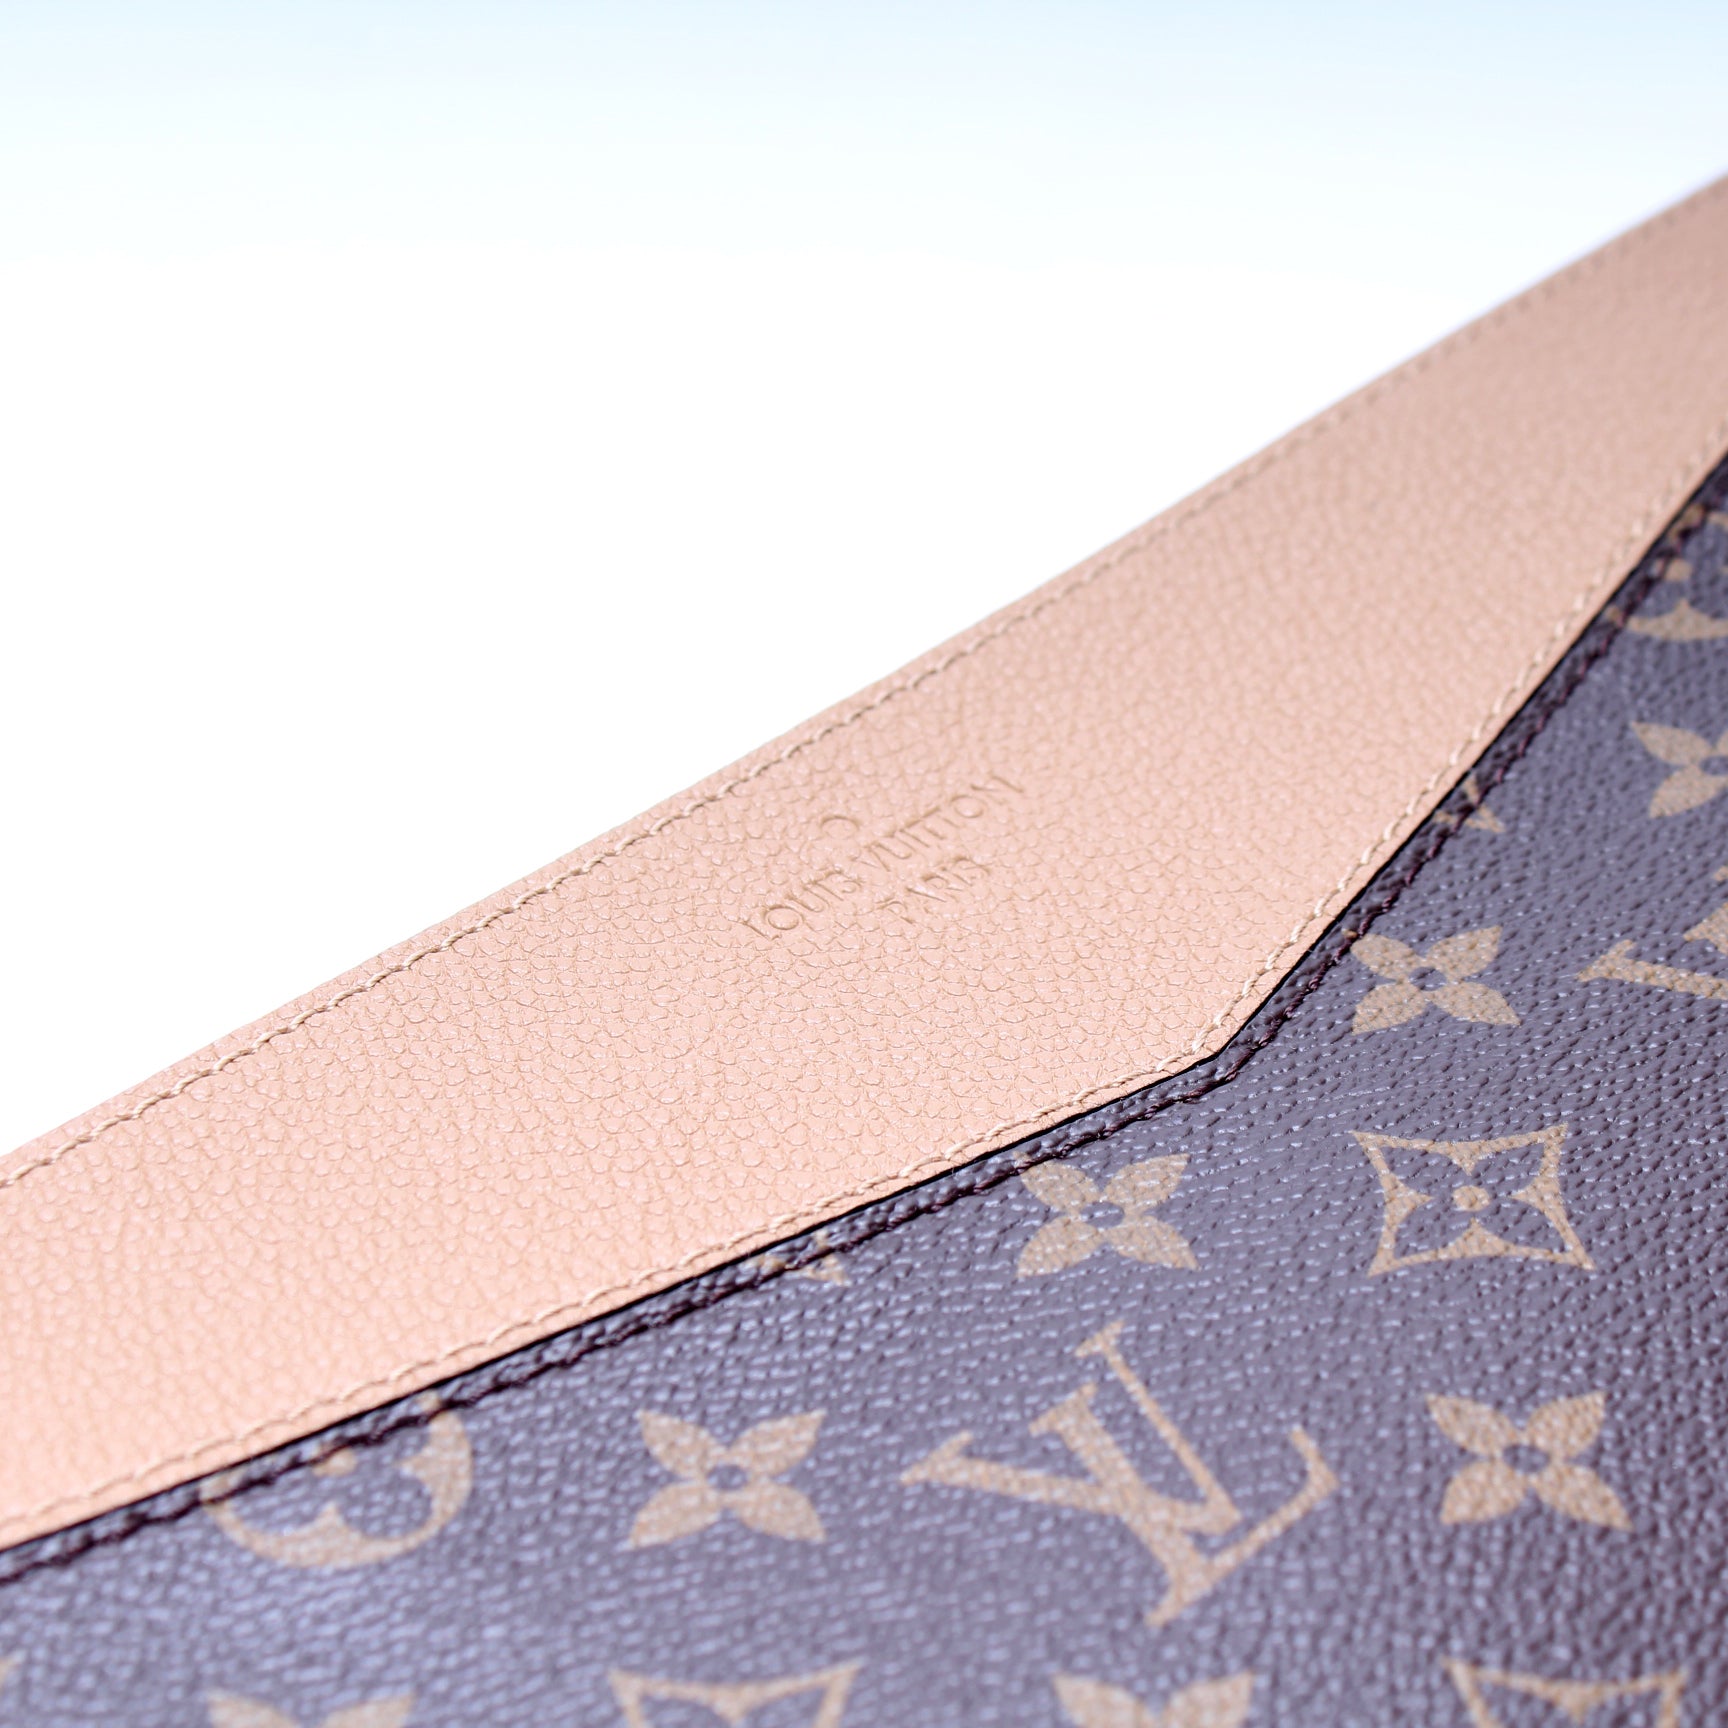 Louis Vuitton Daily Pouch Monogram Sesame - LVLENKA Luxury Consignment